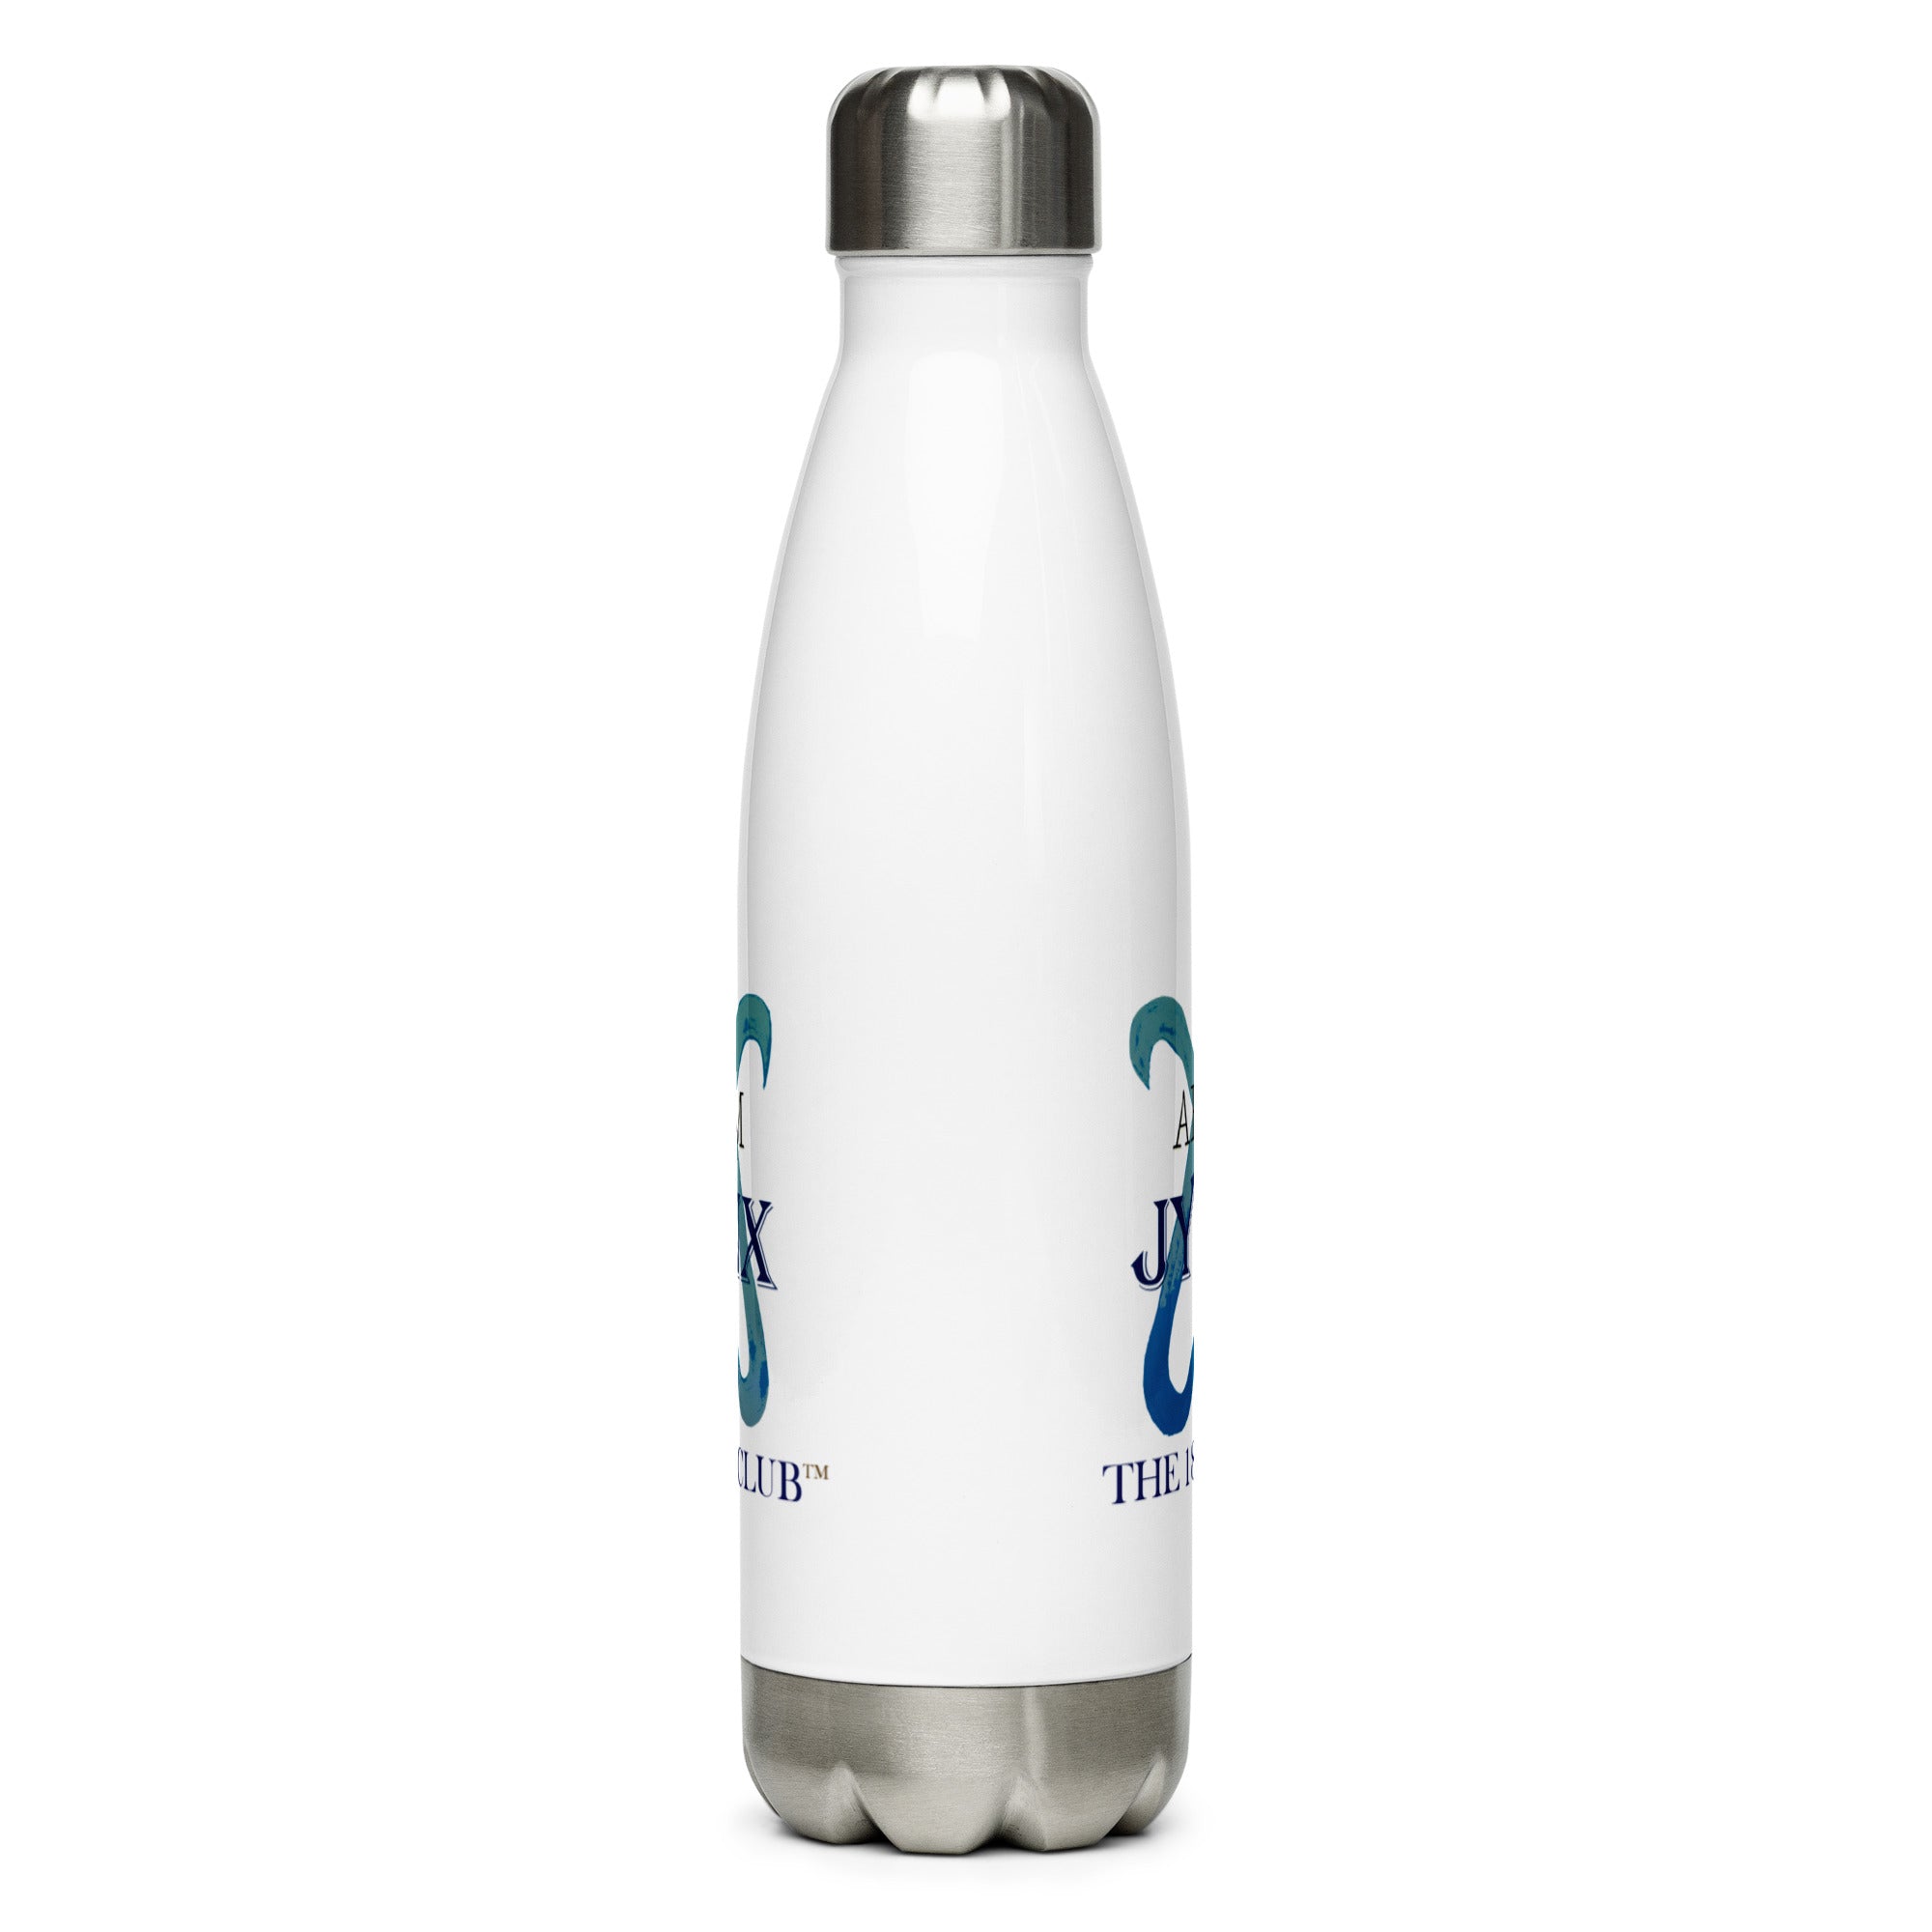 AFM JYNX - Stainless Steel Water Bottle